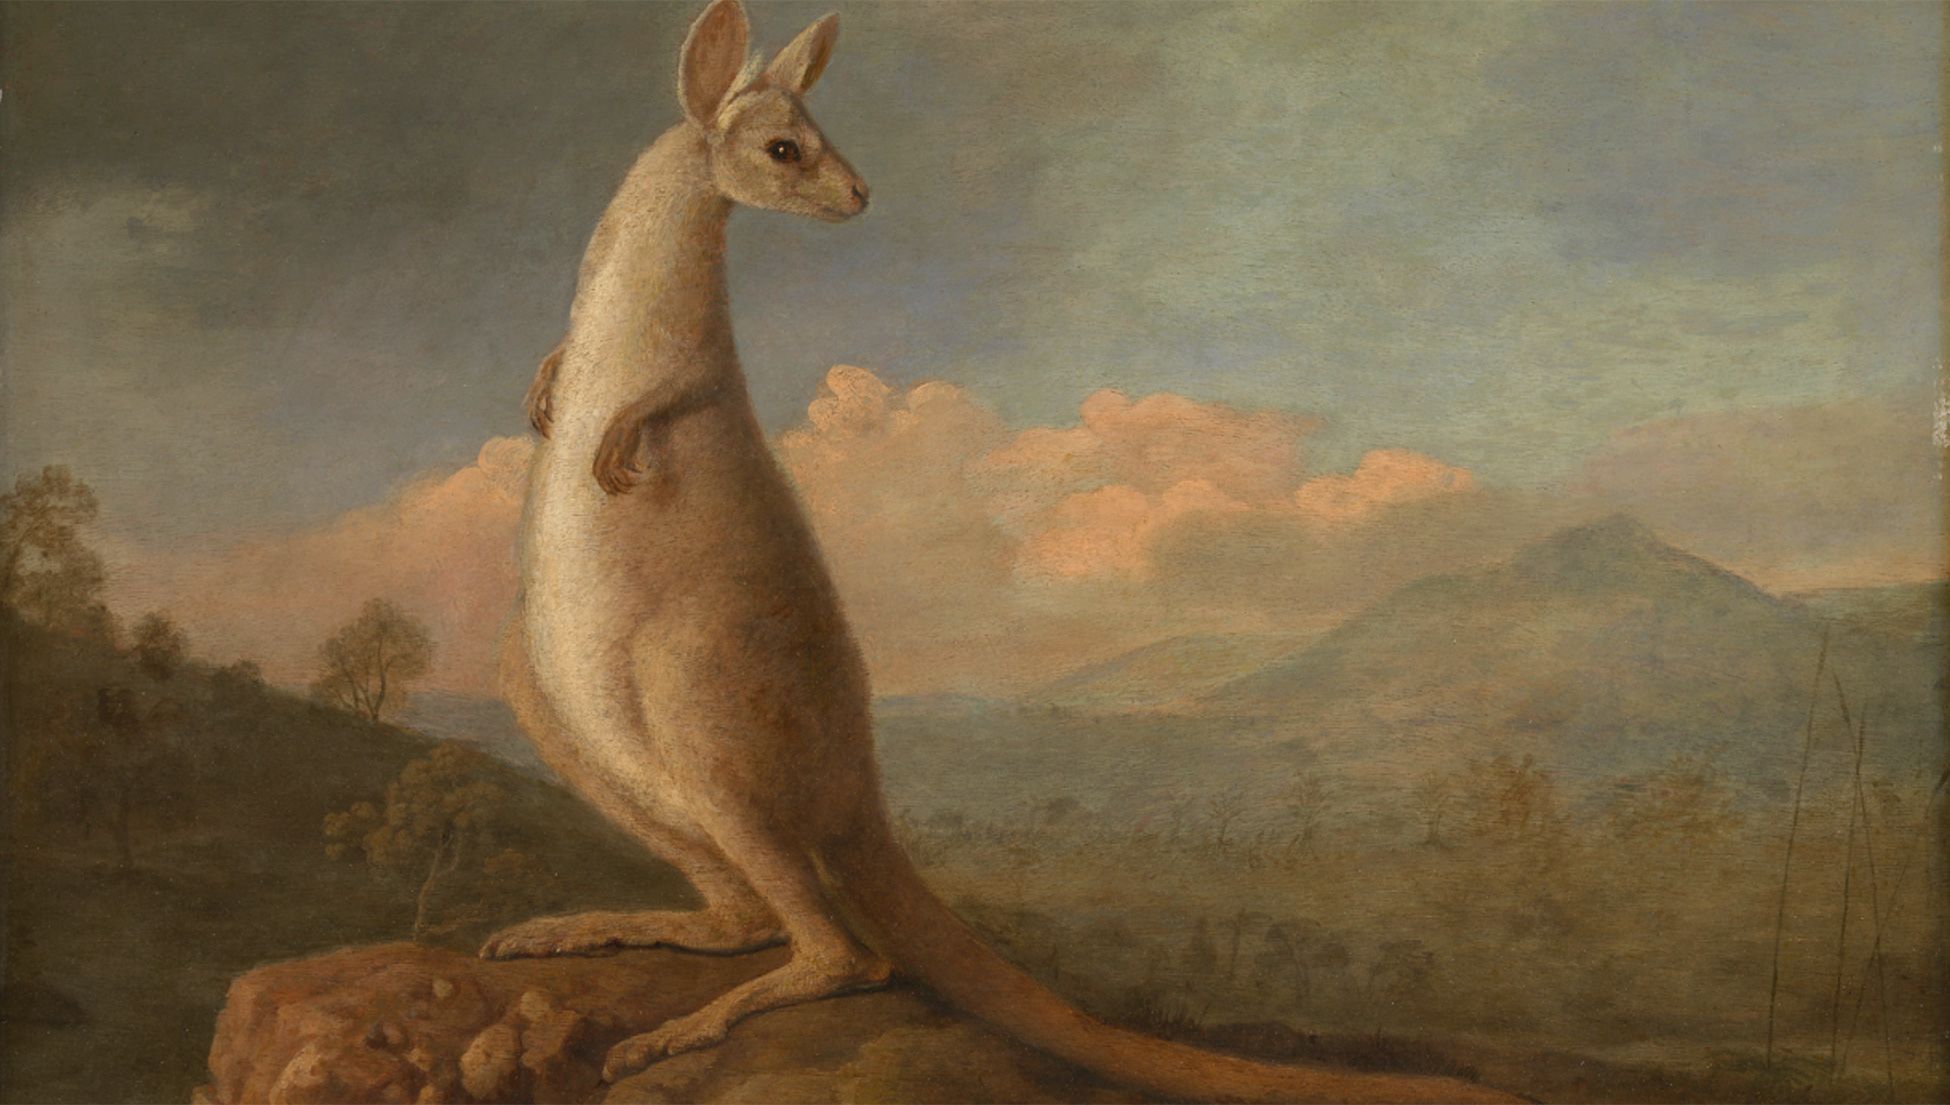 Calling Australia's wildlife 'weird' puts it at risk | Psyche Ideas